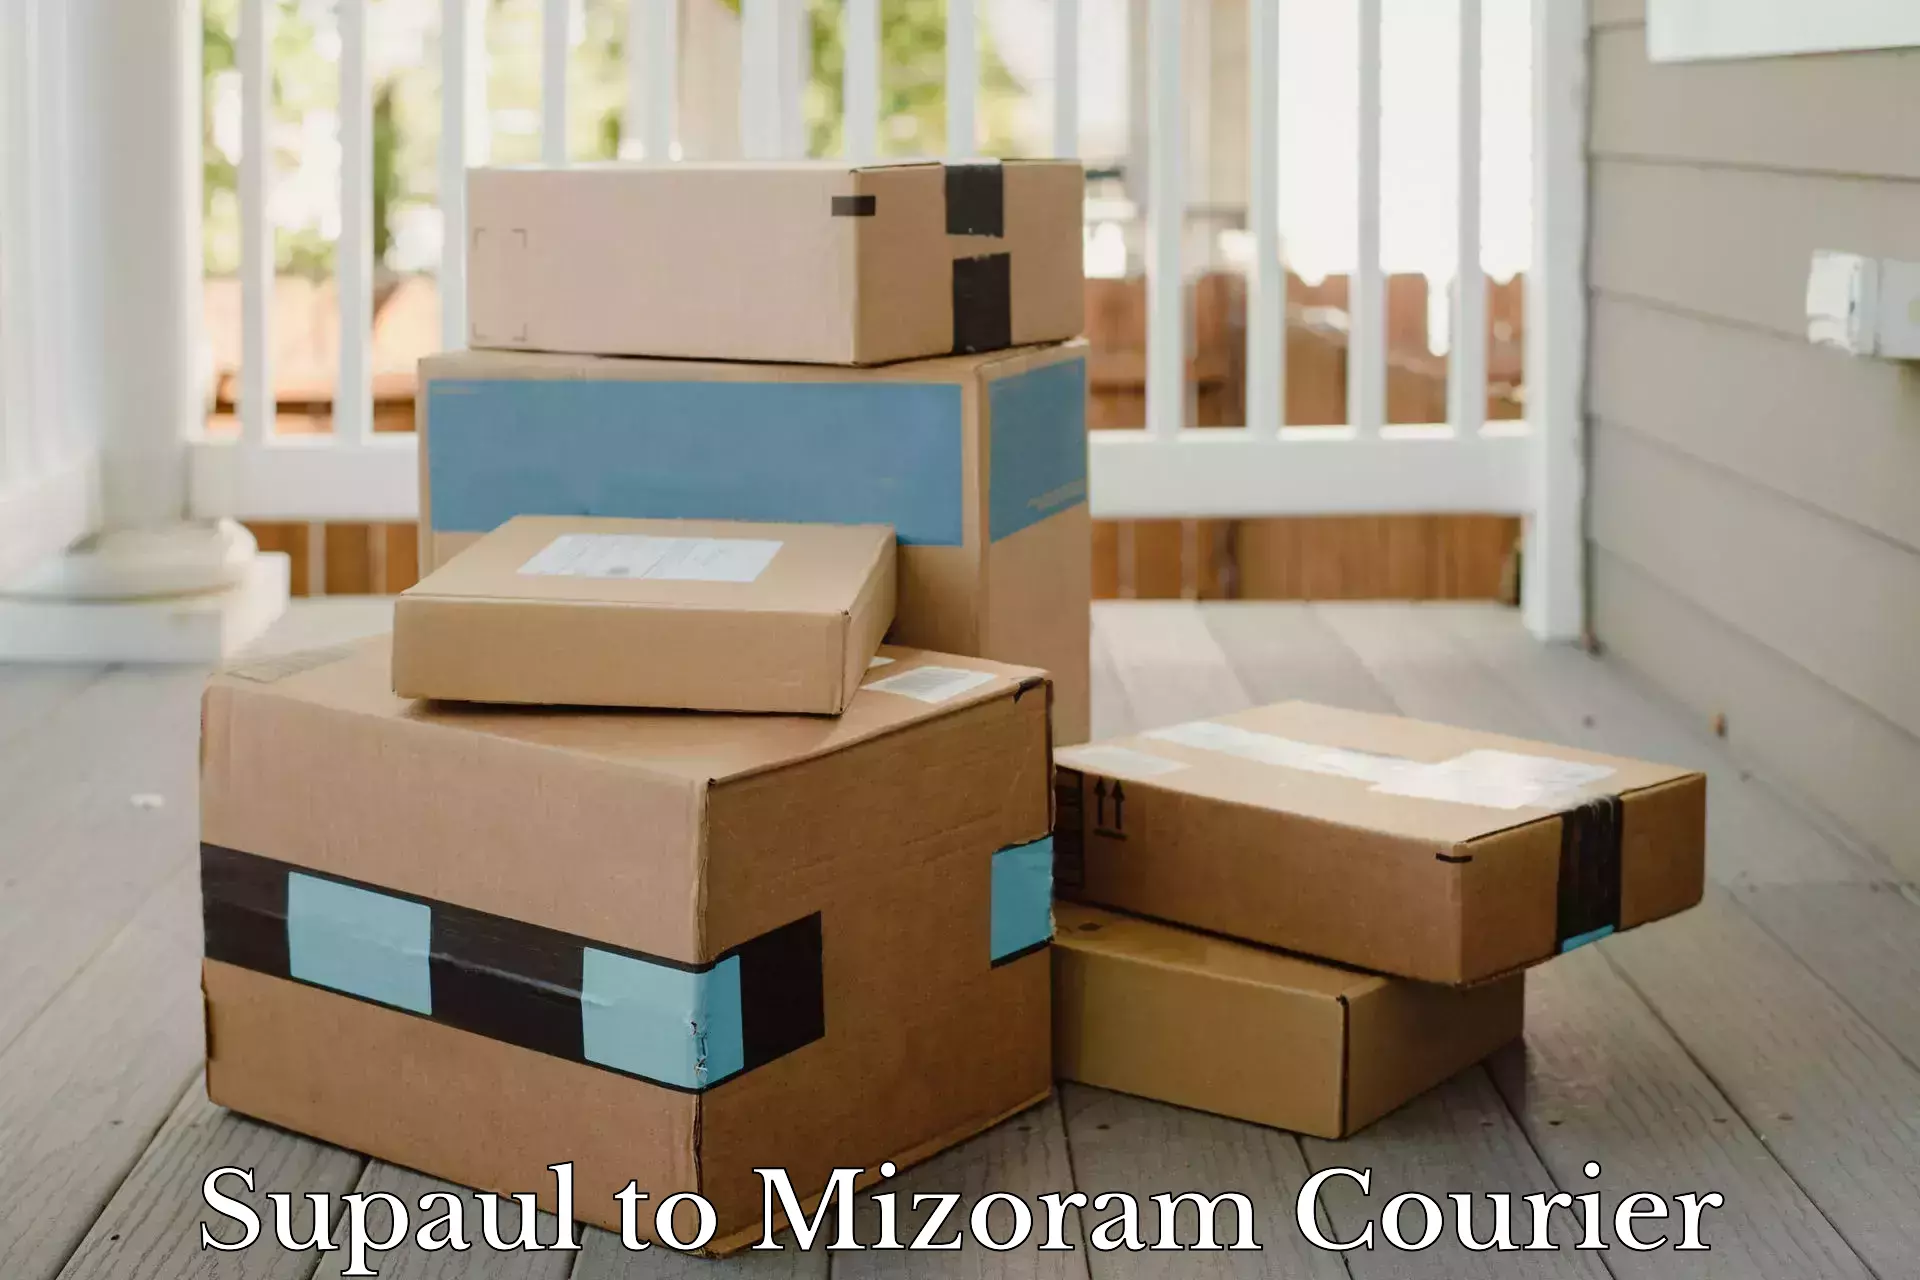 Courier service comparison Supaul to Mizoram